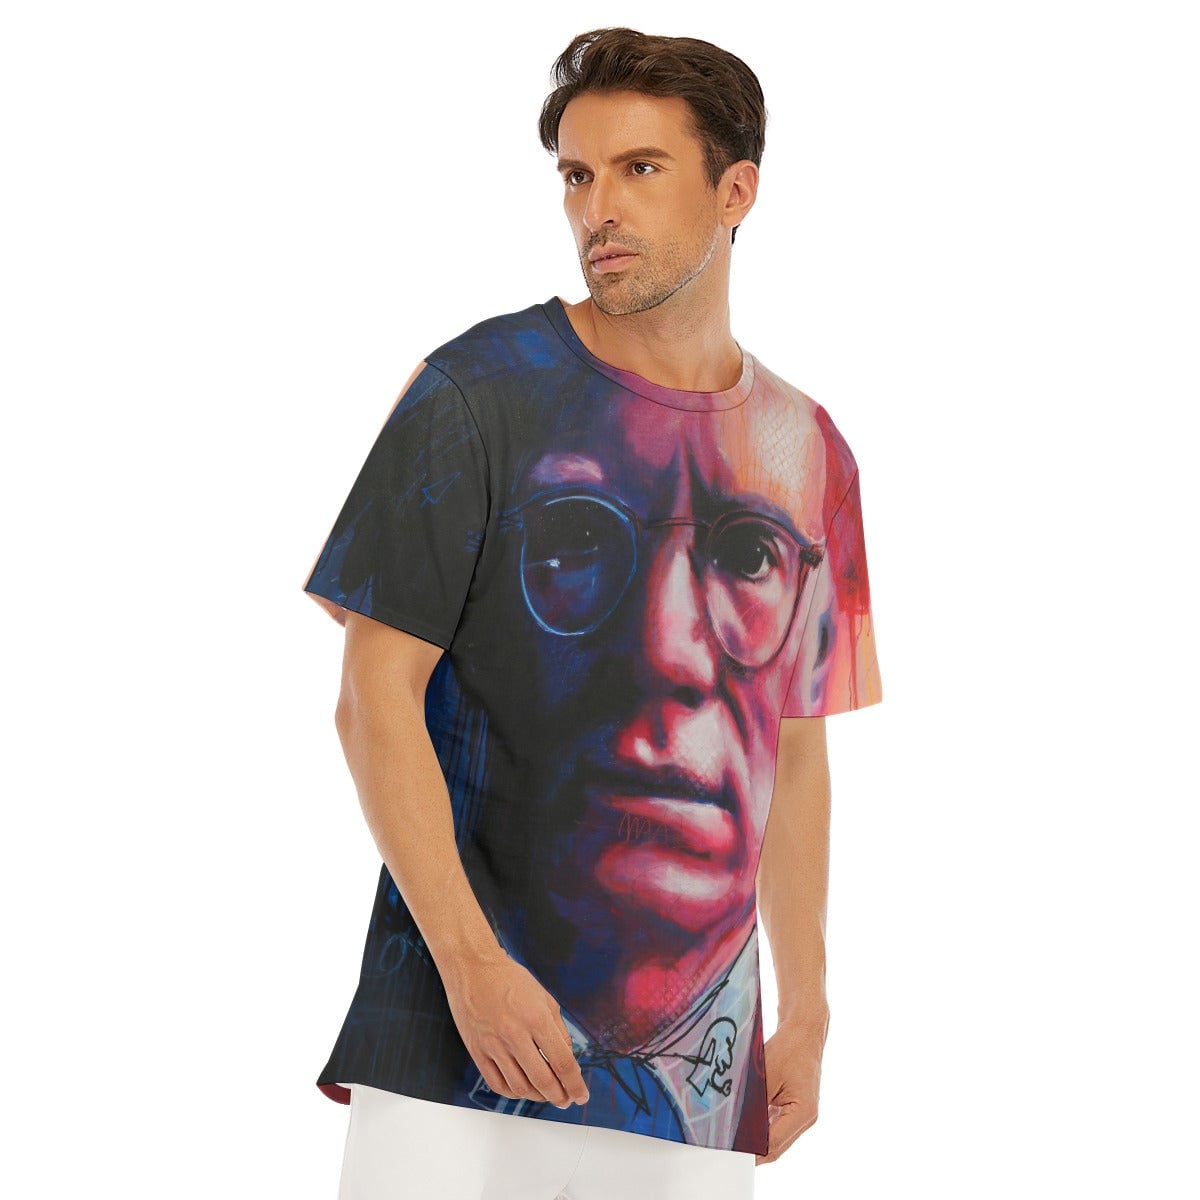 Andy Warhol Iconic Pop Art Surrealism Portrait T-Shirt